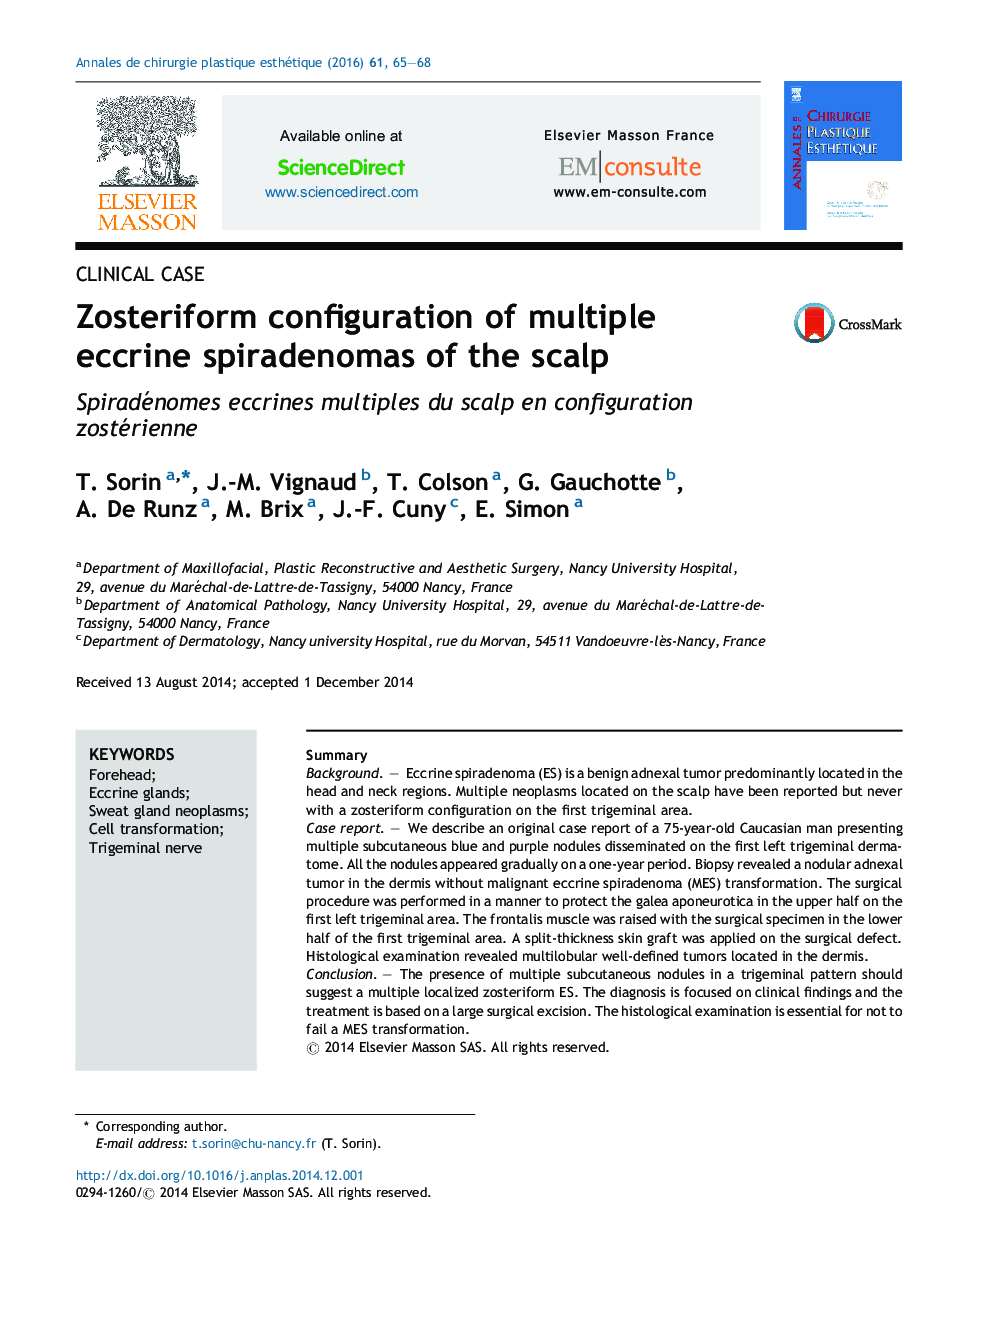 Zosteriform configuration of multiple eccrine spiradenomas of the scalp